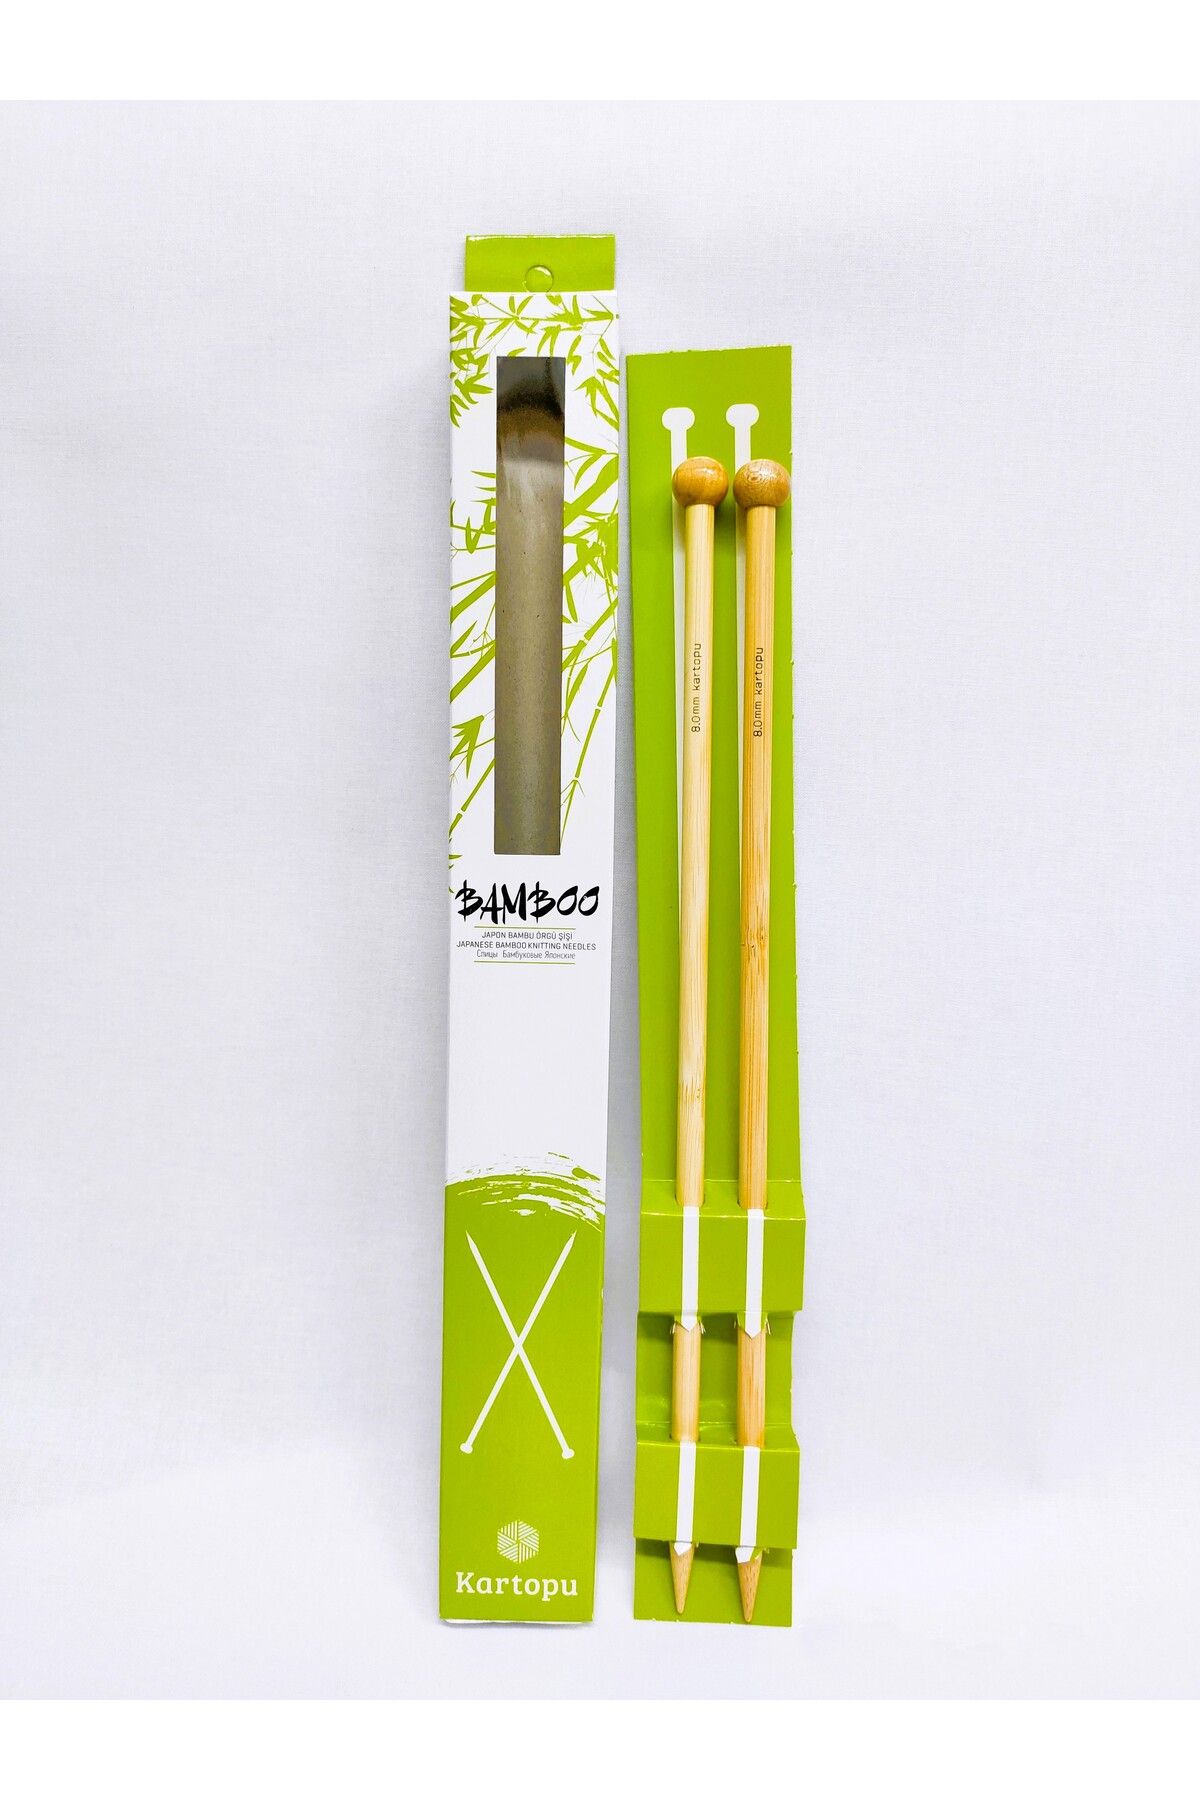 ATMACA TUHAFİYE Kartopu Japon Bambu Şiş 8 Numara Bamboo Ahşap Örgü Şişi